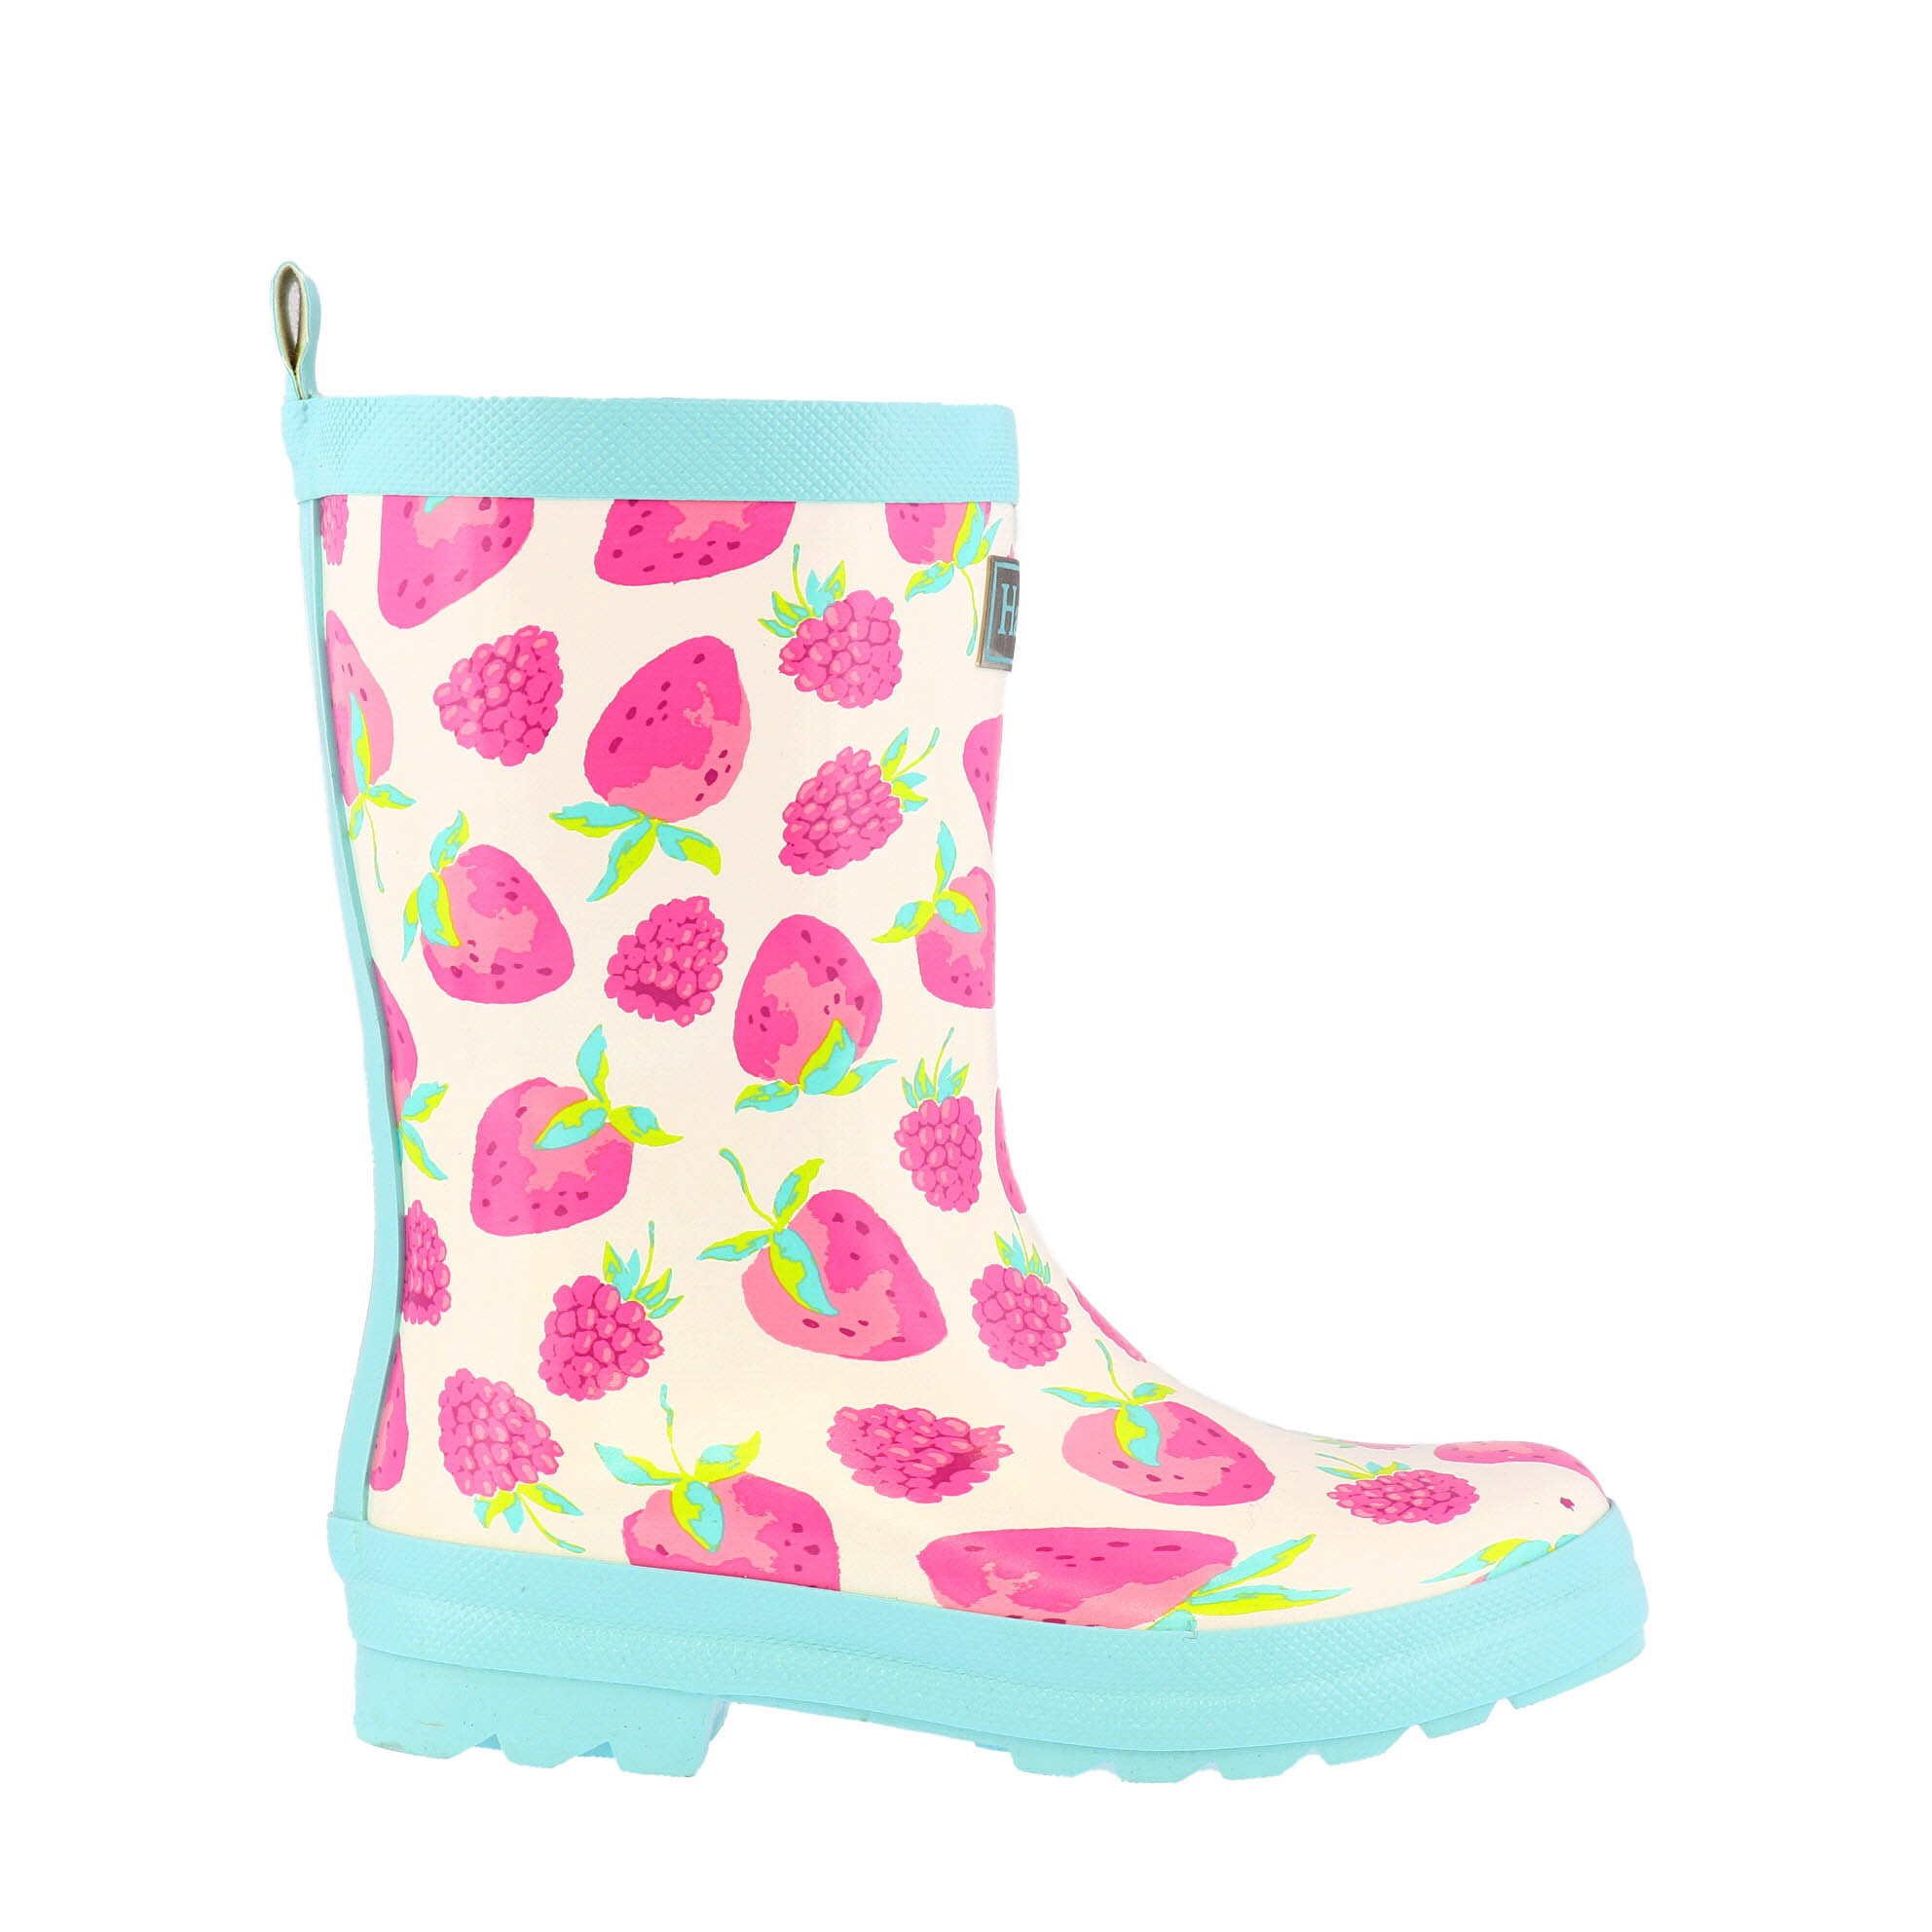 Toddler Girls Light Up Flamingo Rain Boots Size 9 - analoggulf.com